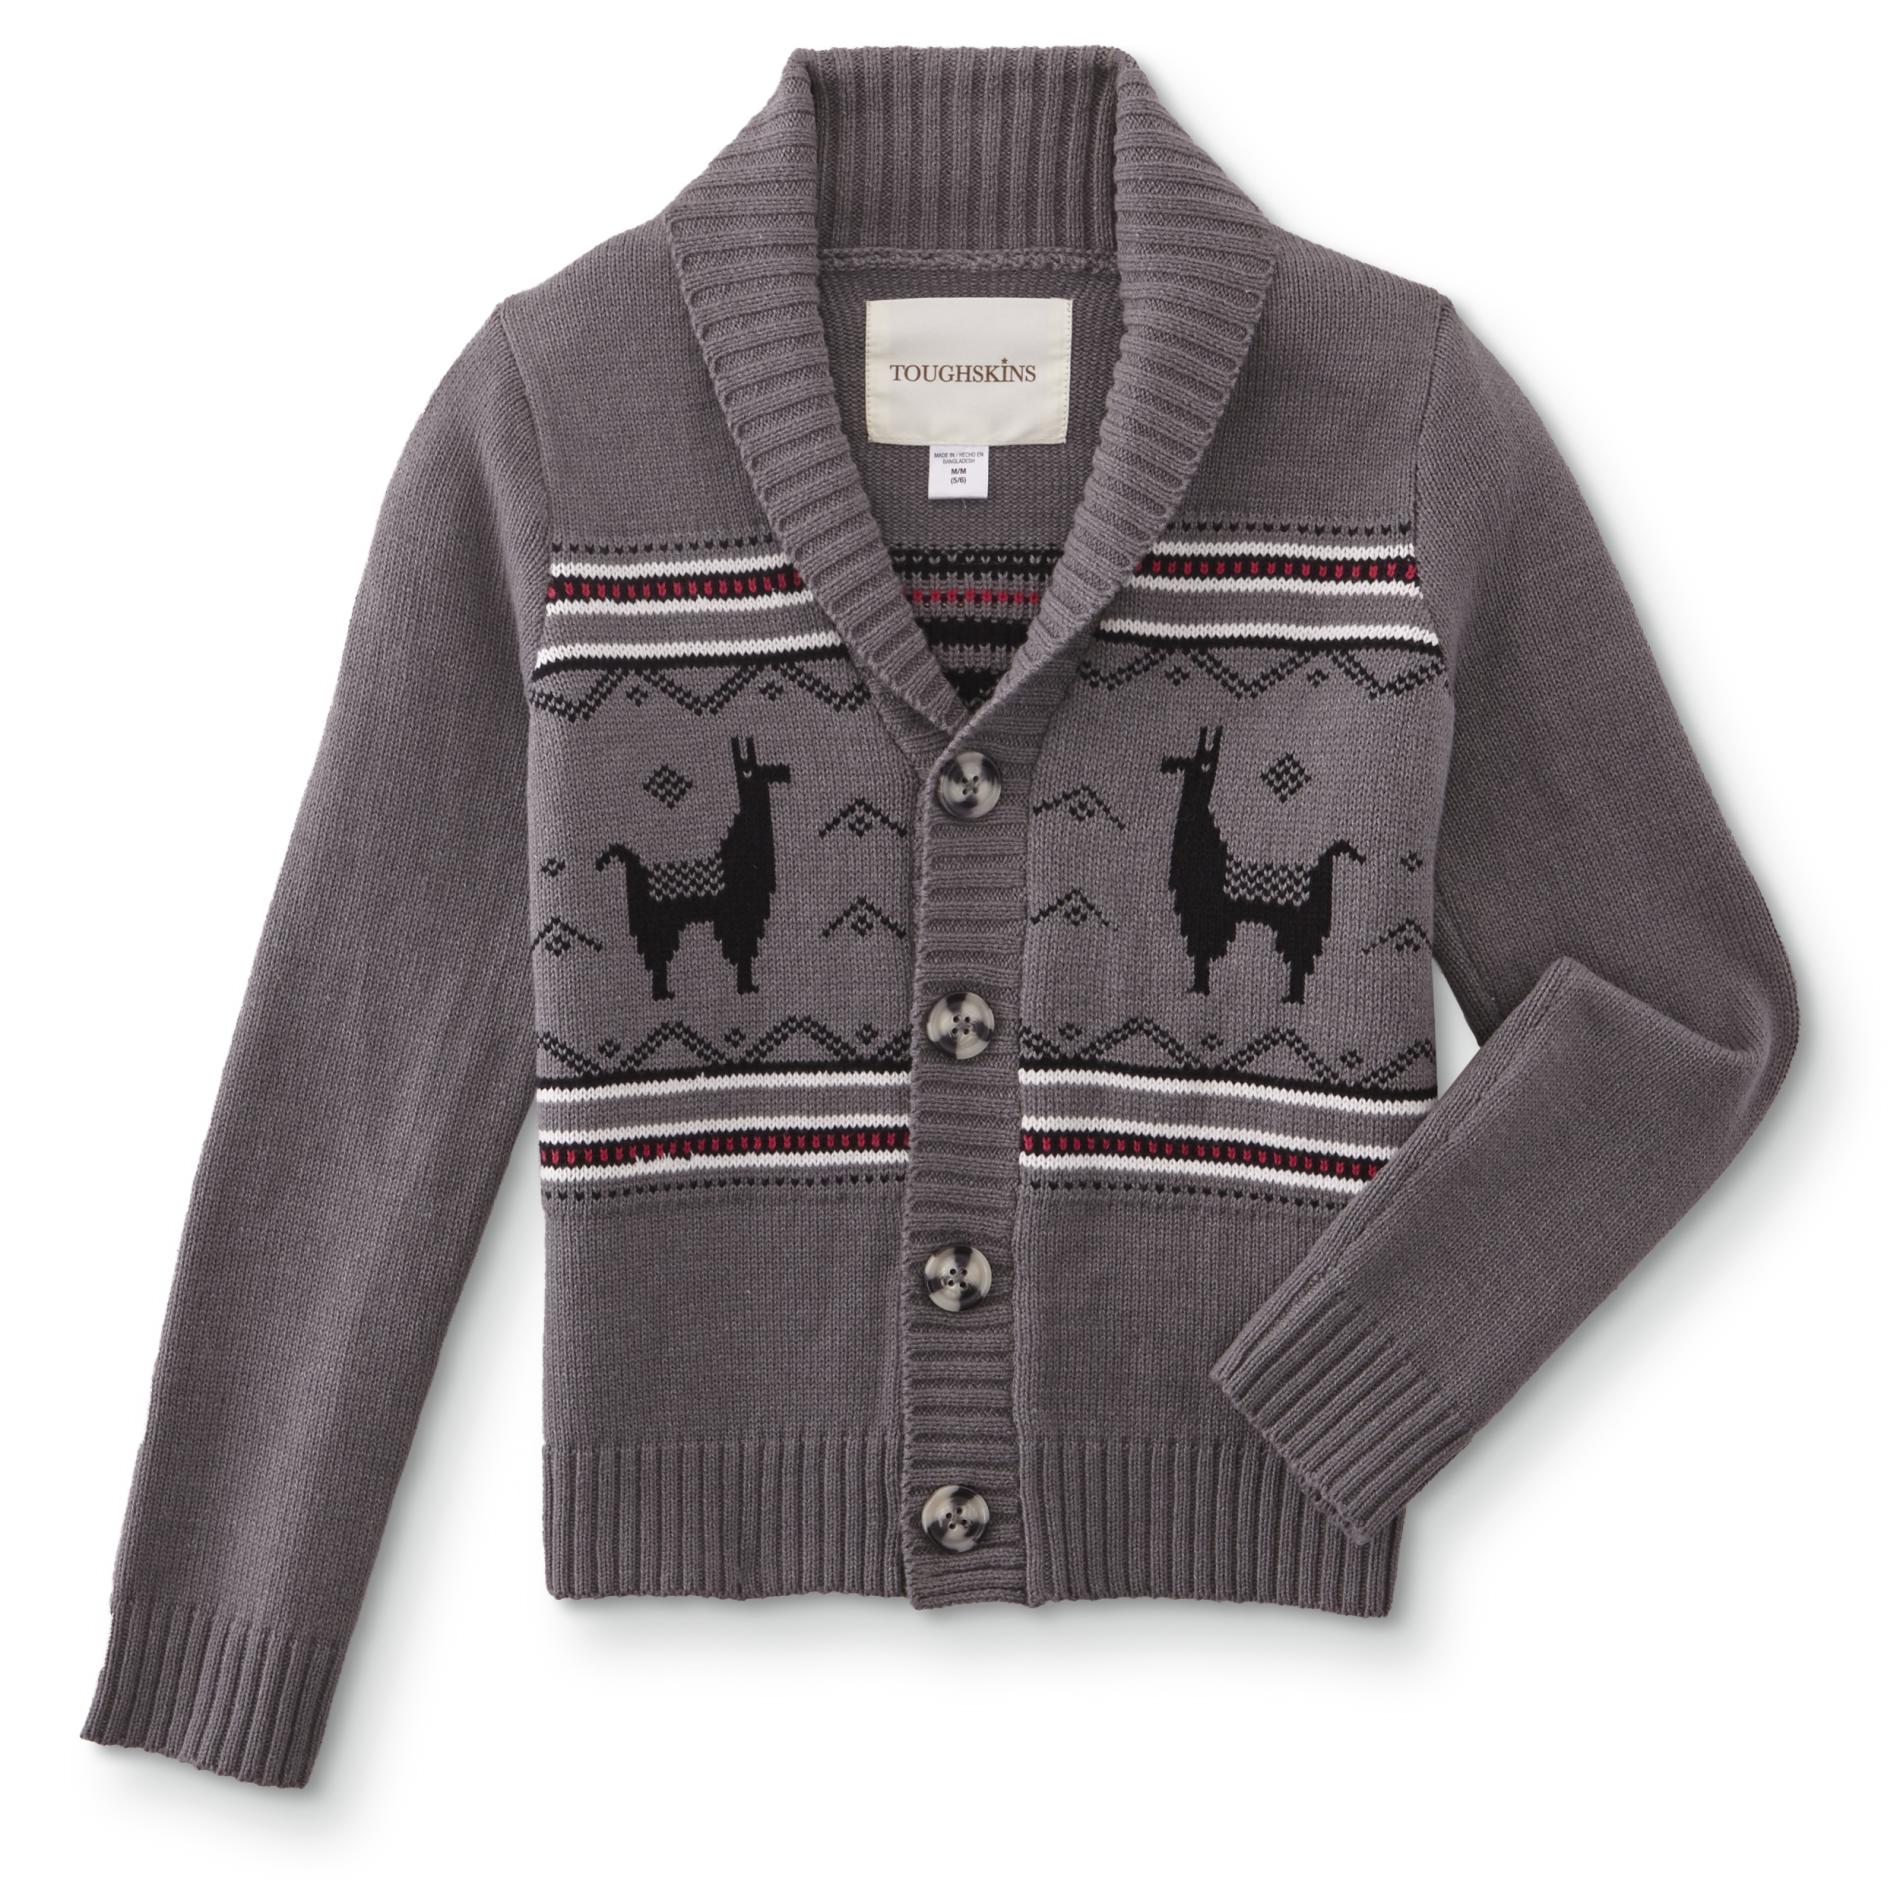 Toughskins Boys' Cardigan Sweater - Llama